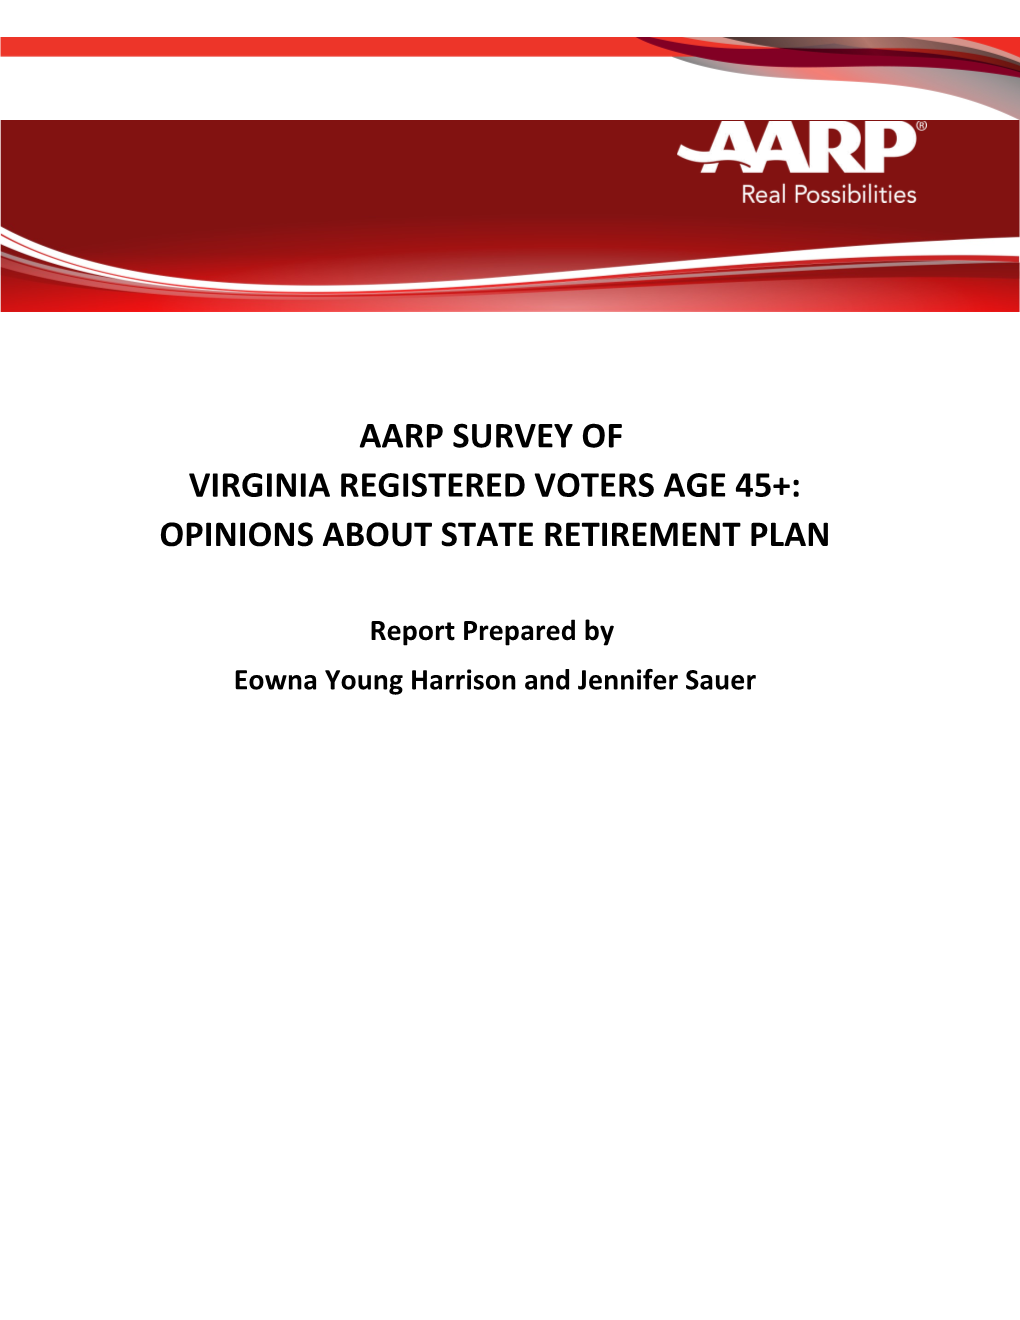 Virginia Registered Voters Age 45+